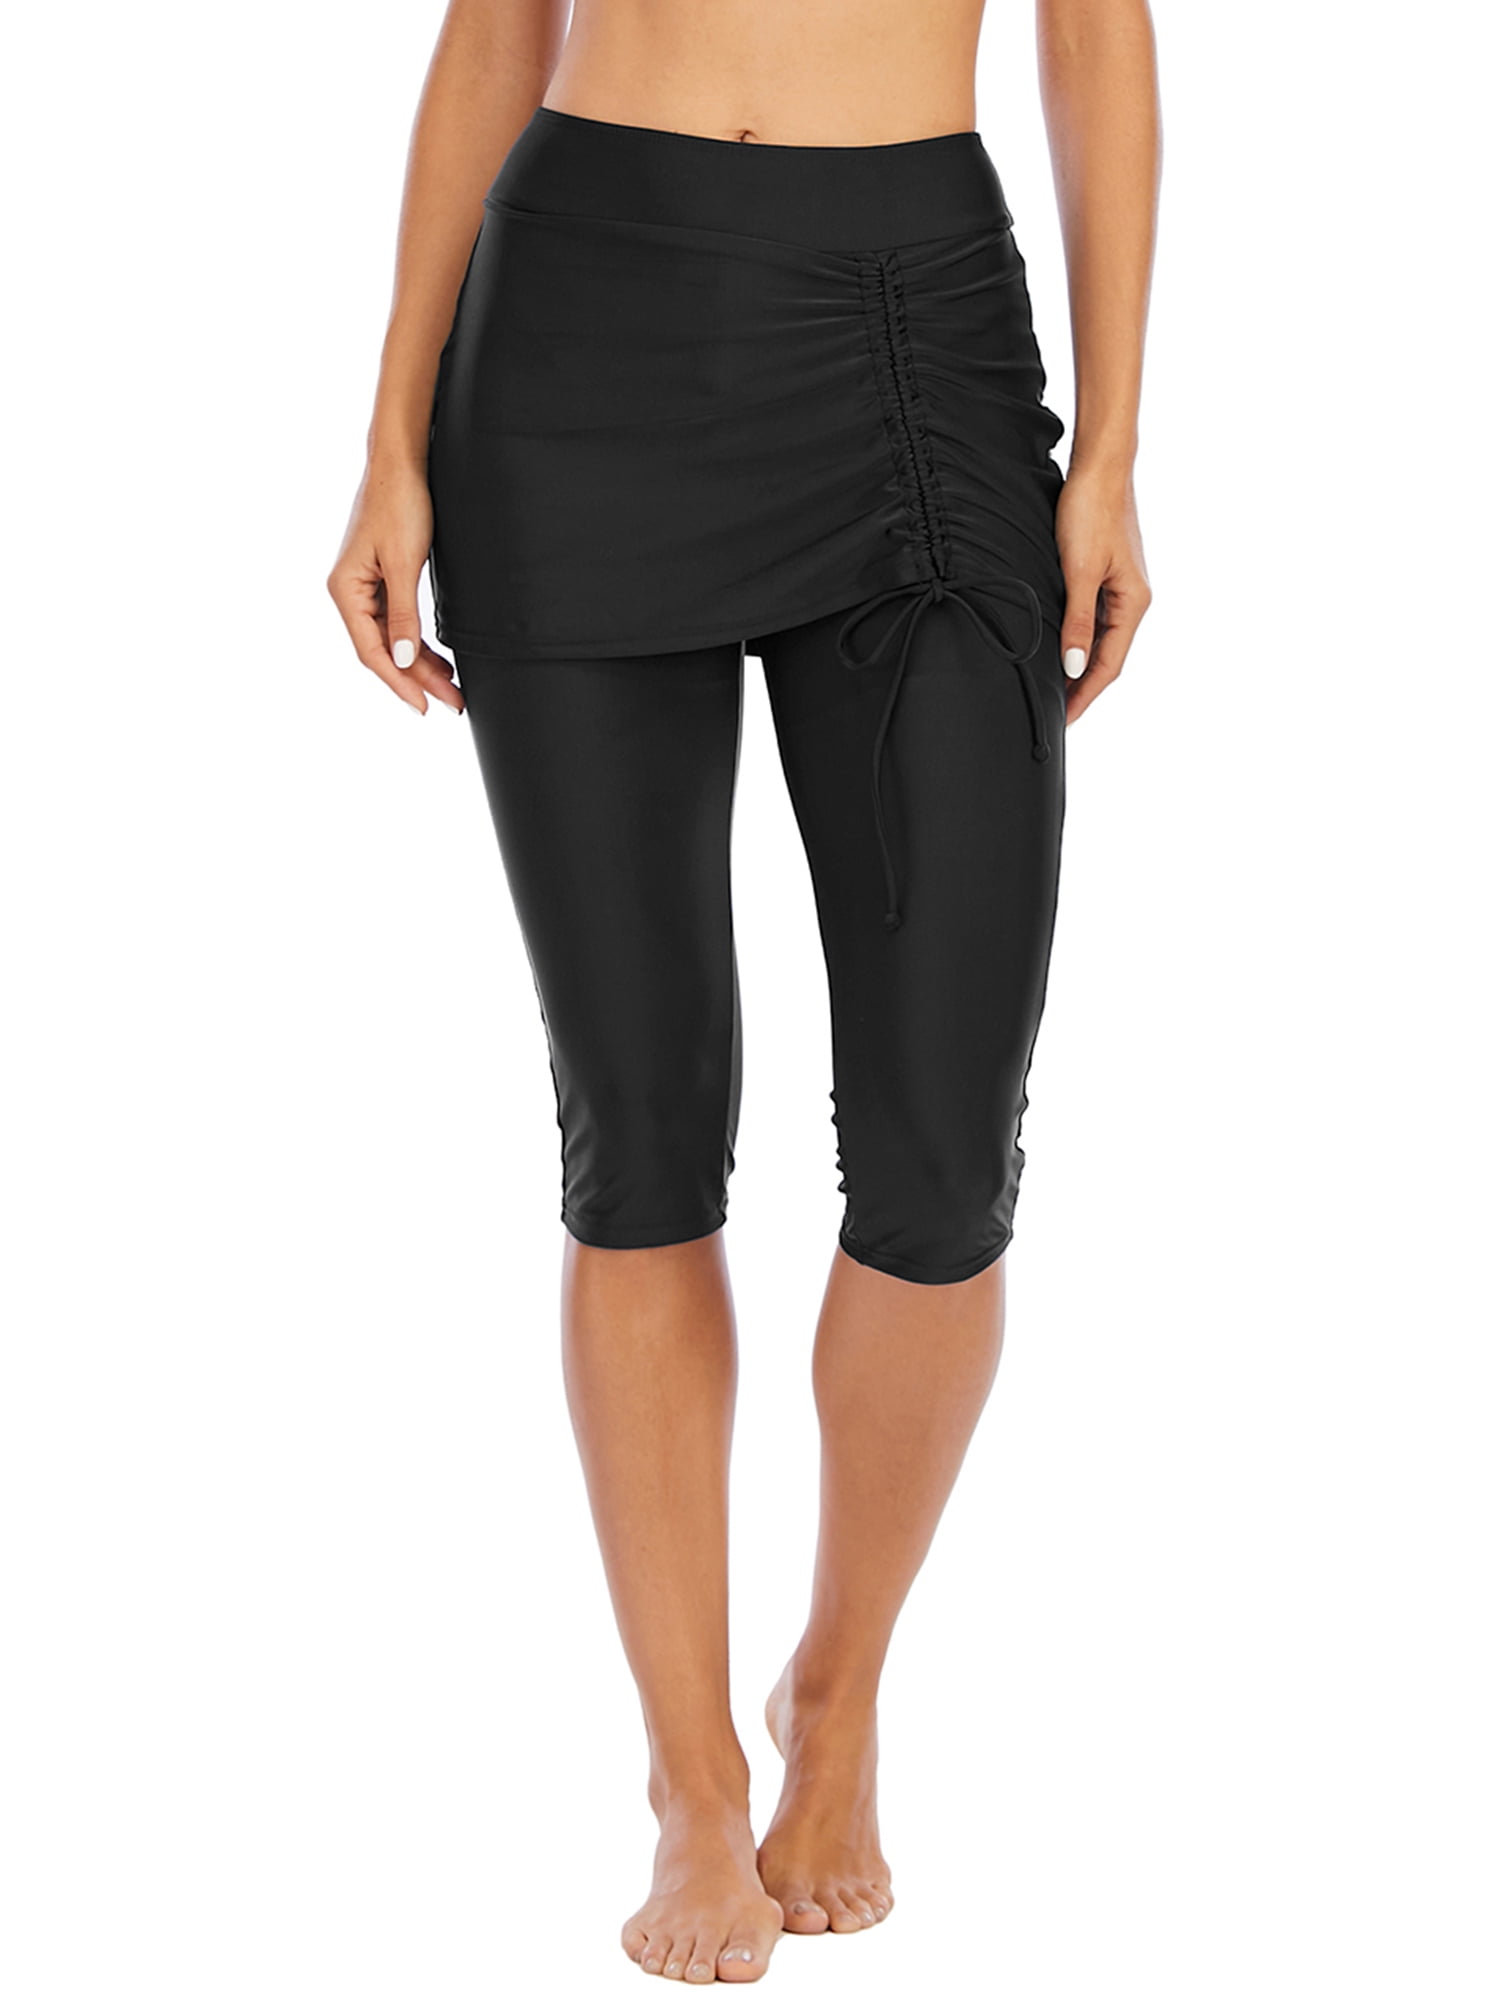 Zia-Tech Capri Skirt Grey Capri Leggings Retail $67 S 